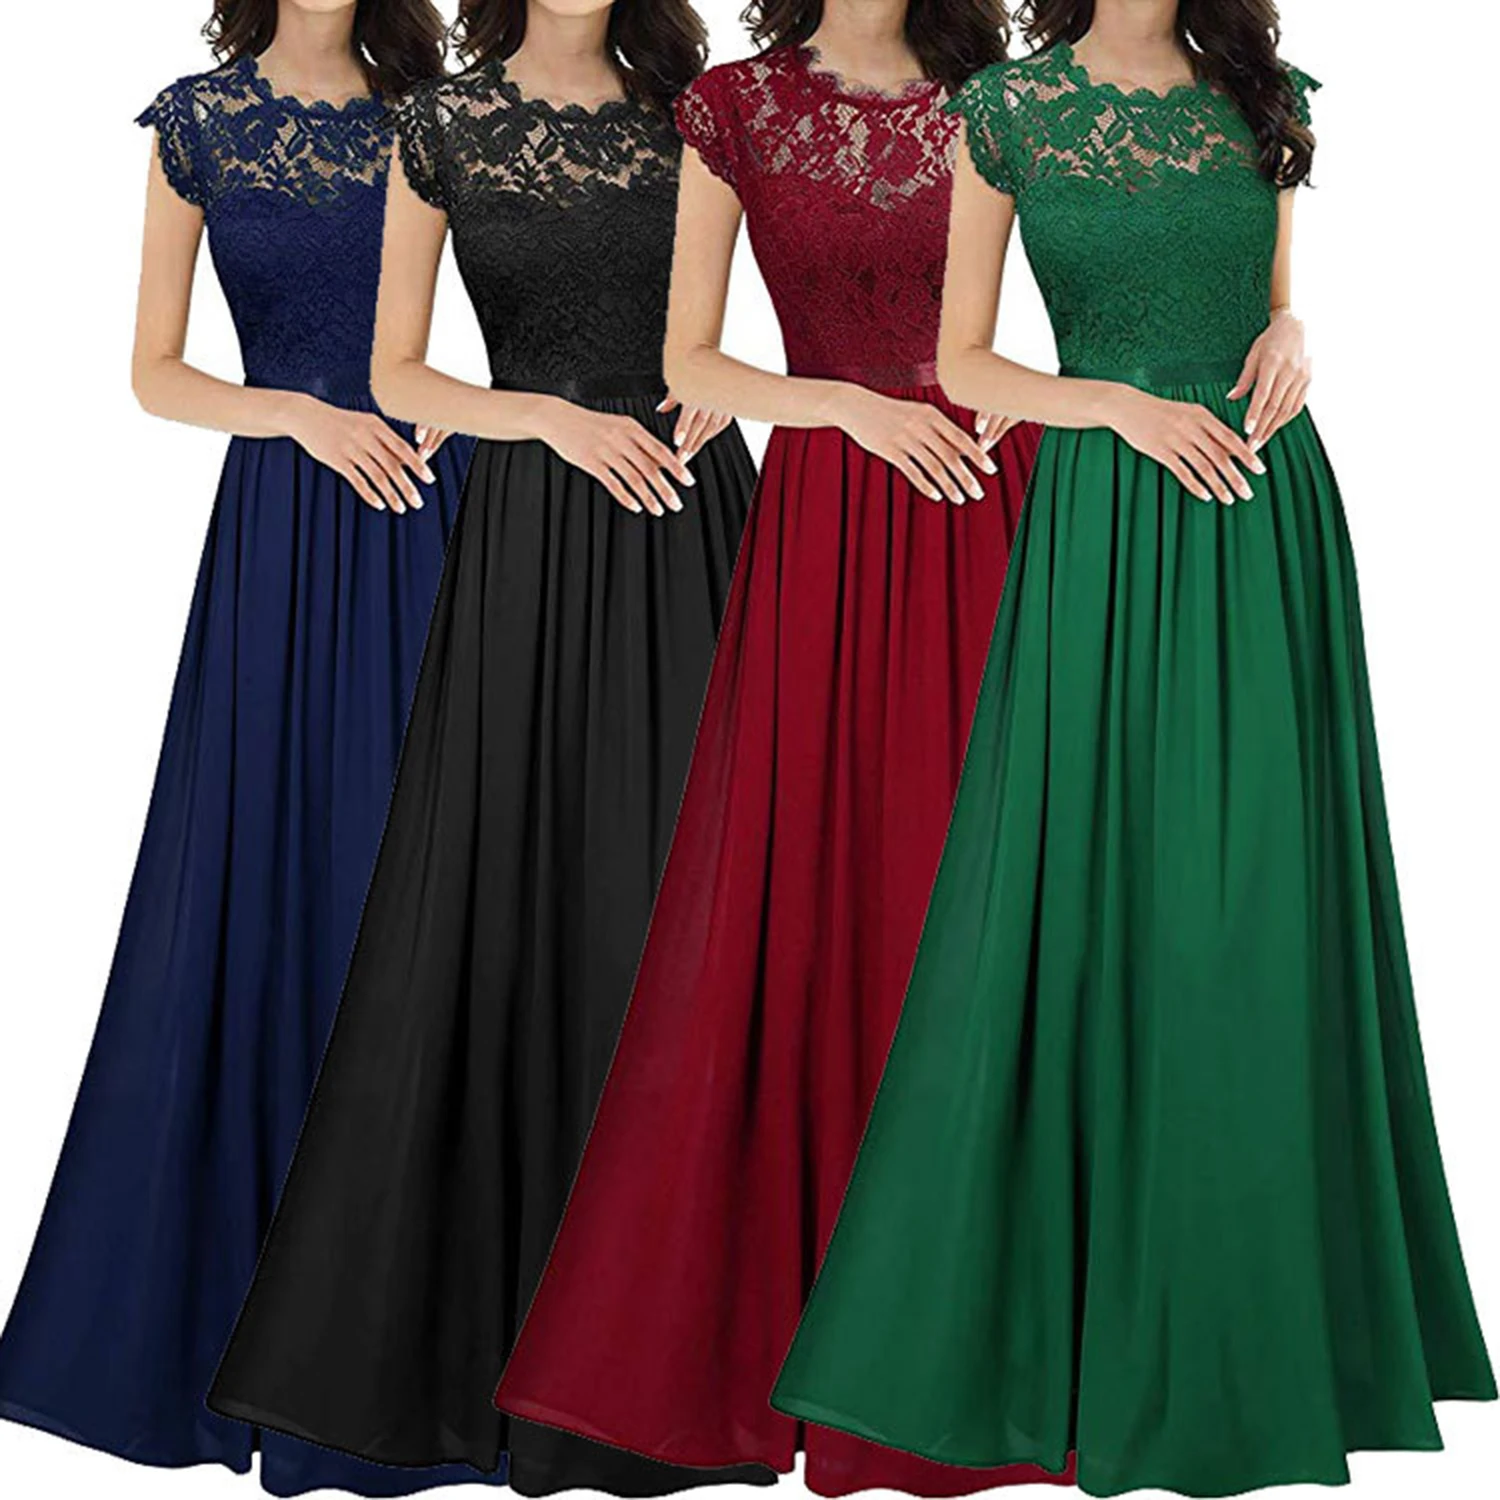 Women's Elegant Vintage Floral Lace Hollow out Chiffon Long Evening Party Dress Formal Maxi Dresses shirt dress